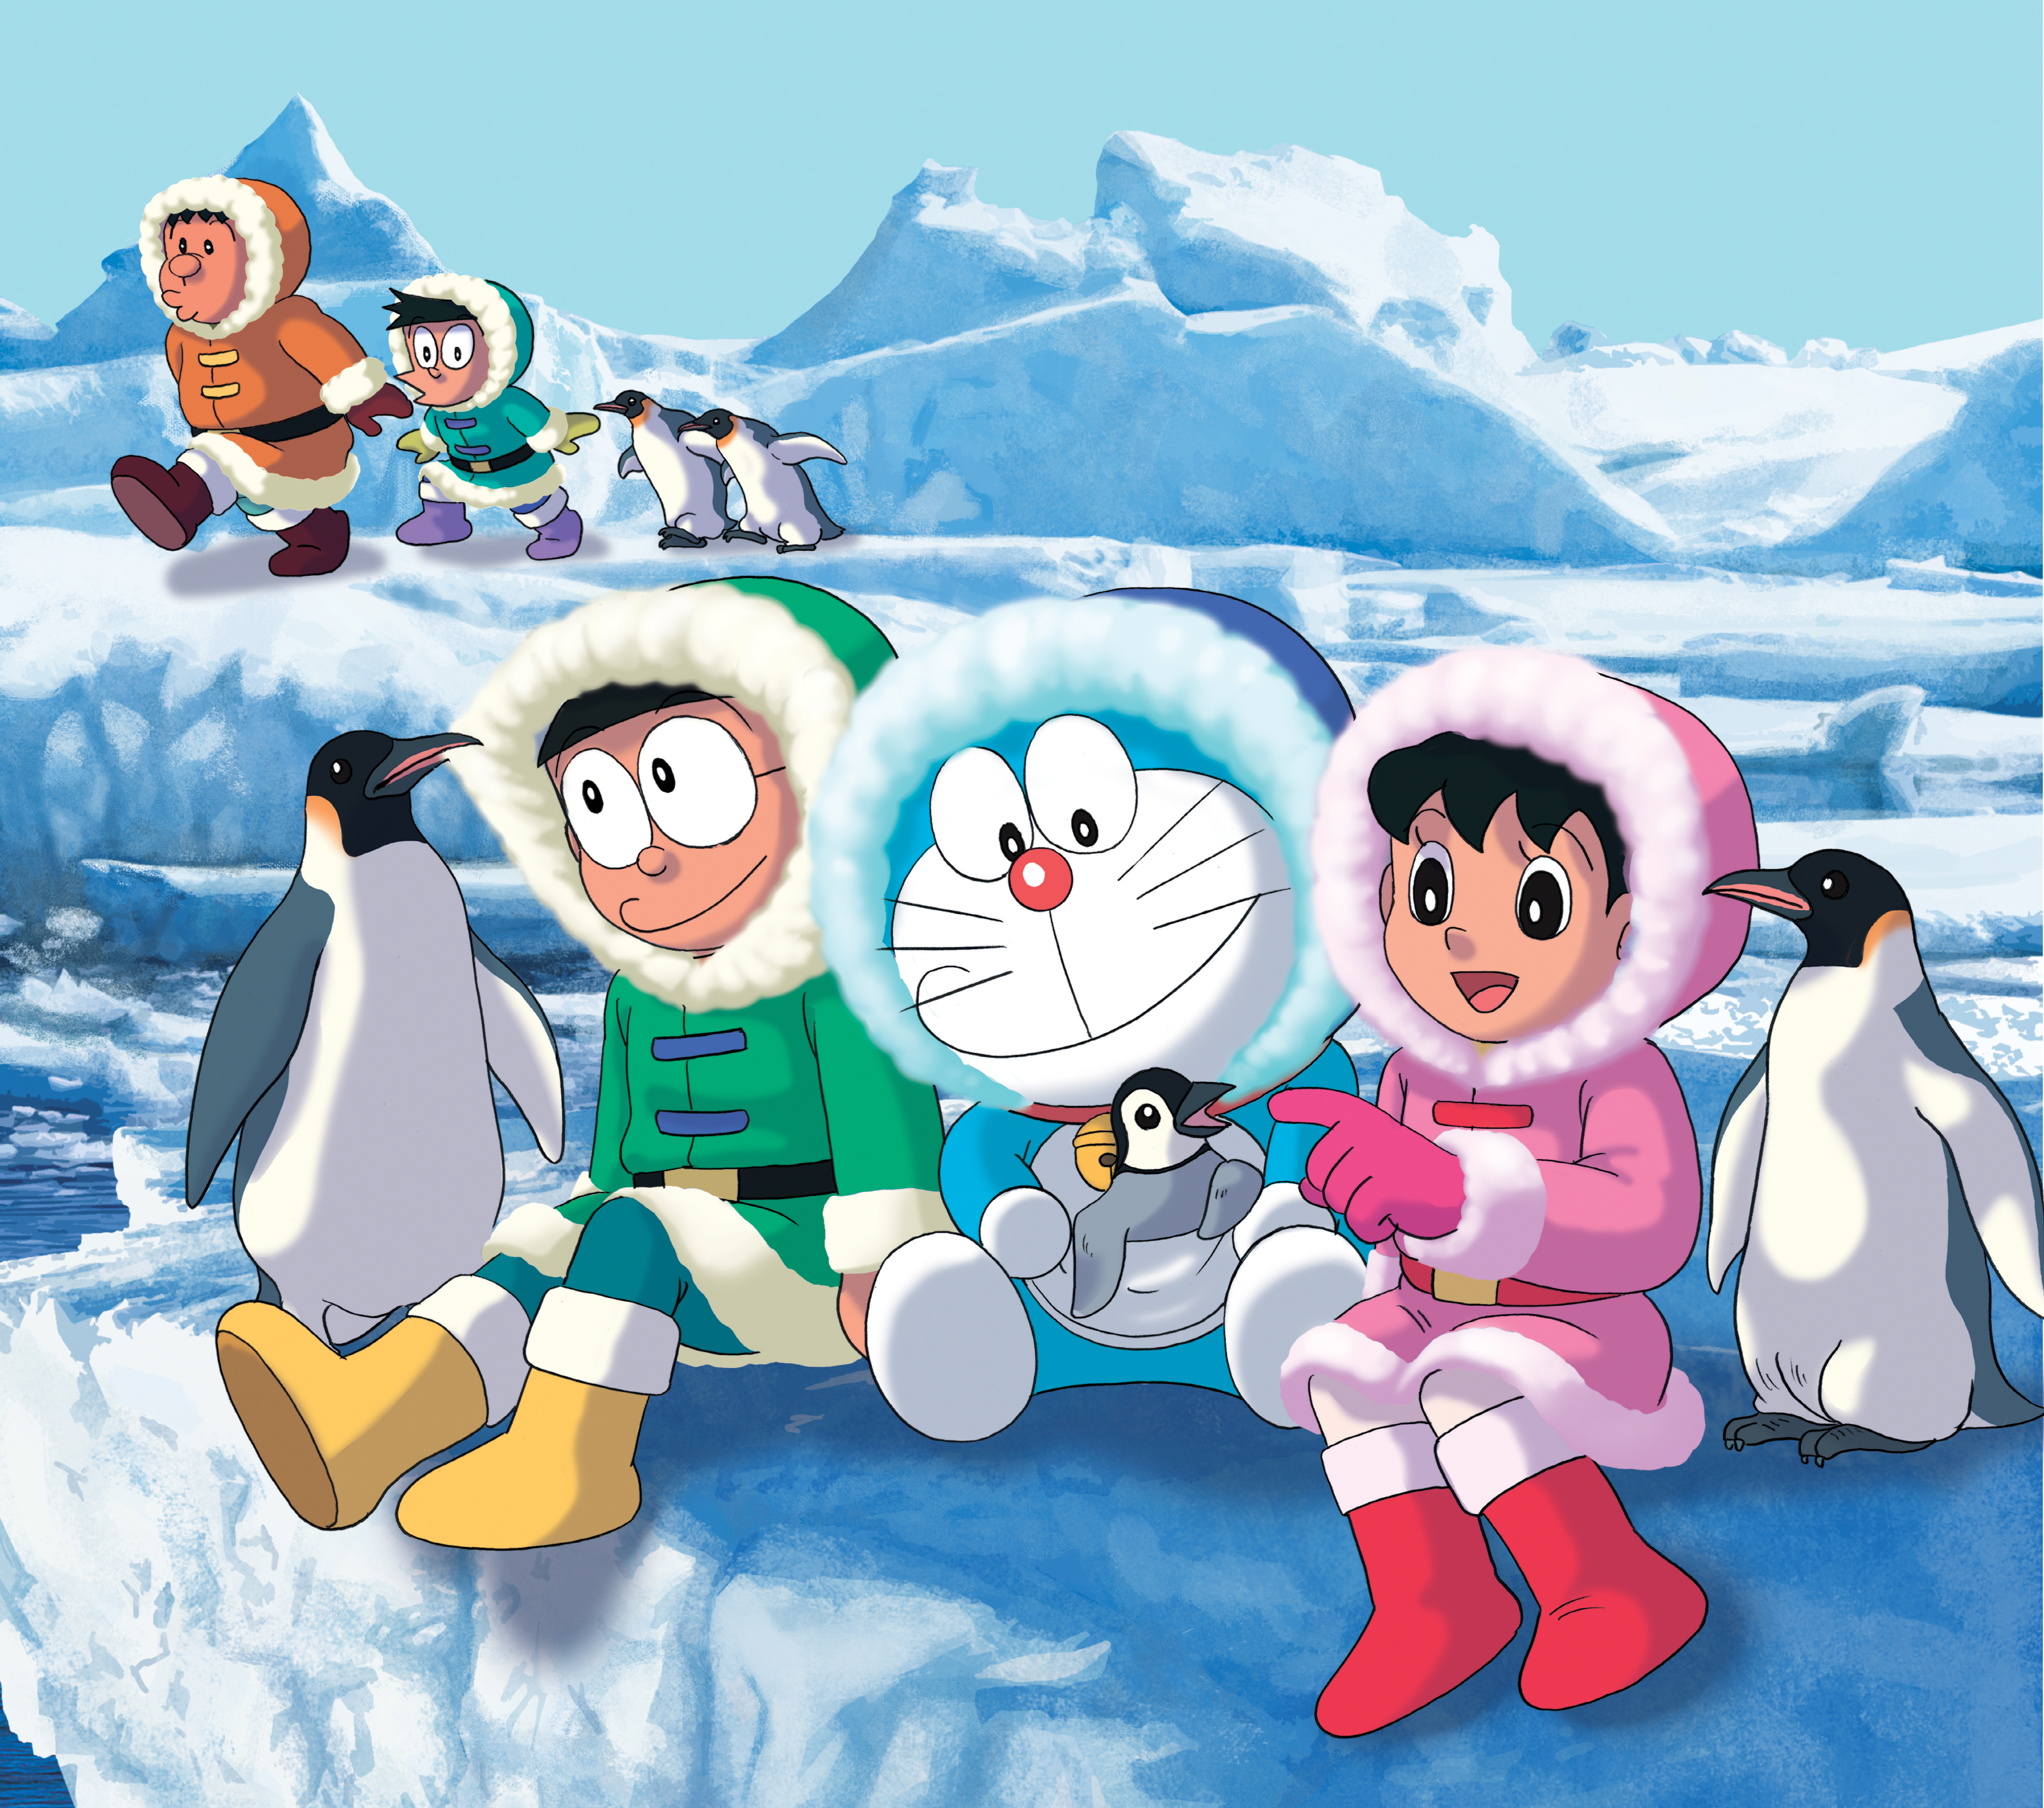 nobita et shizuka fond d'écran hd,dessin animé,dessin animé,animation,jouant dans la neige,illustration